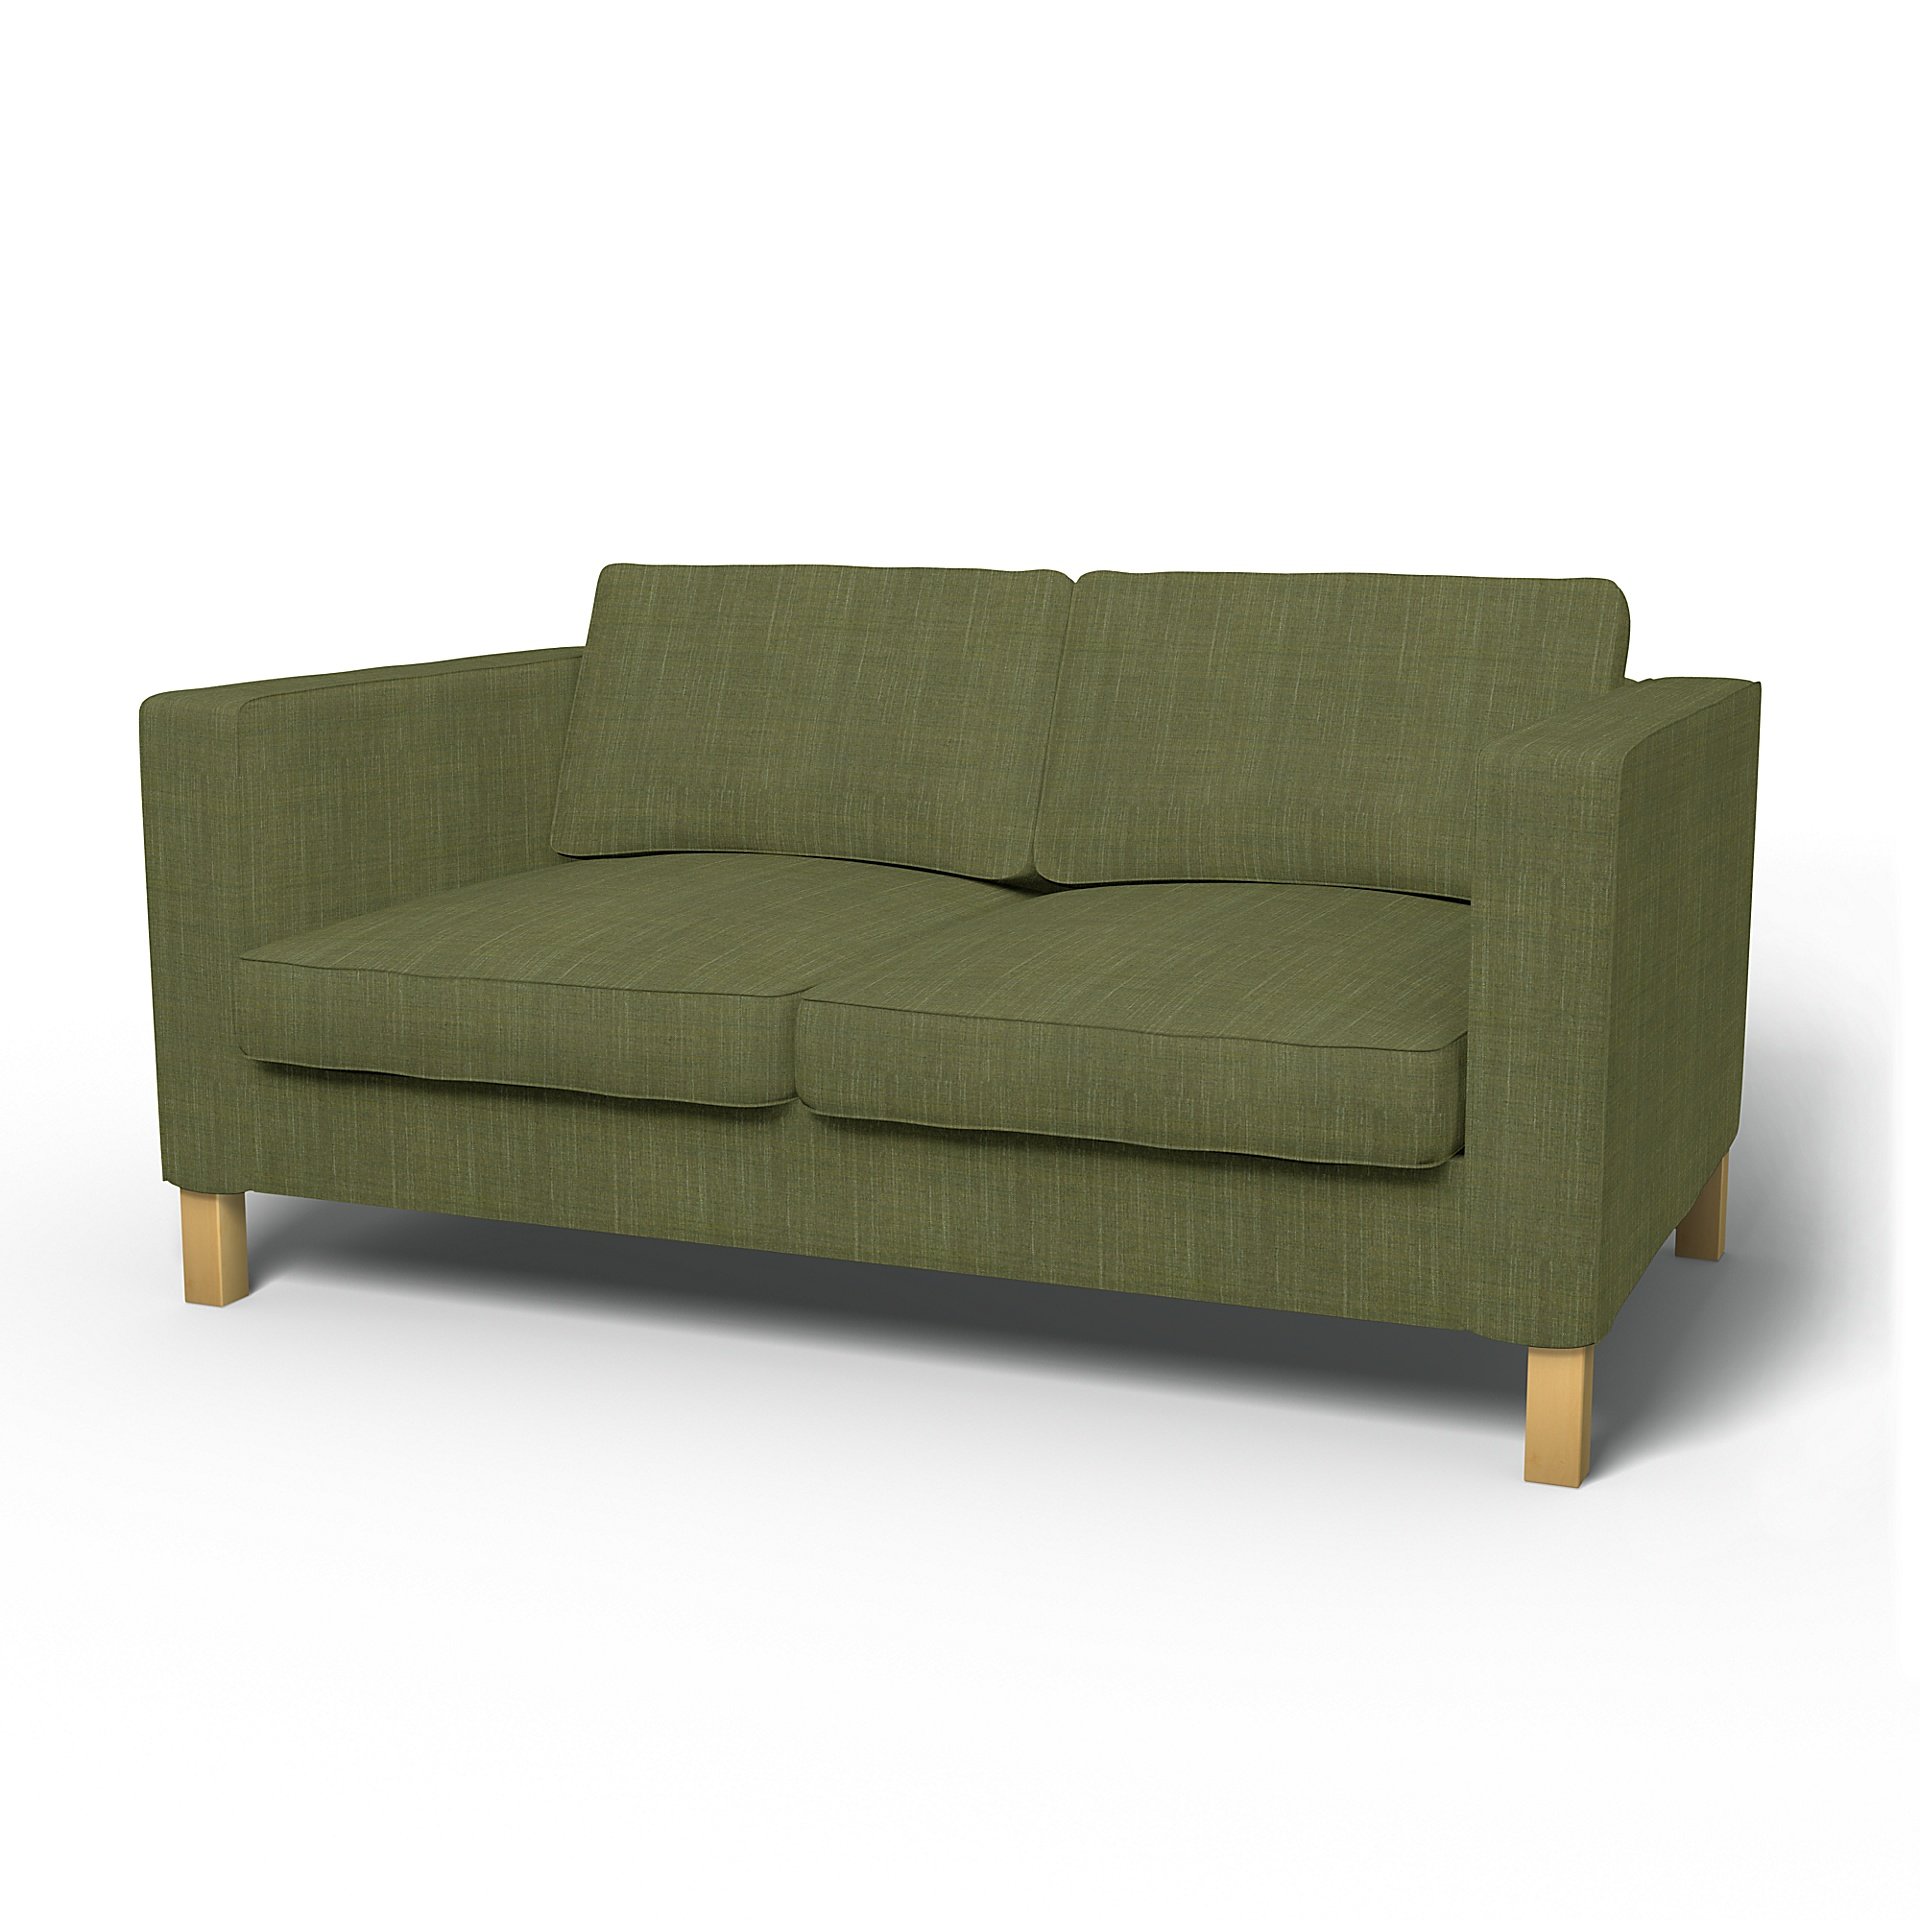 IKEA - Karlanda 2 Seater Sofa Cover, Moss Green, Boucle & Texture - Bemz